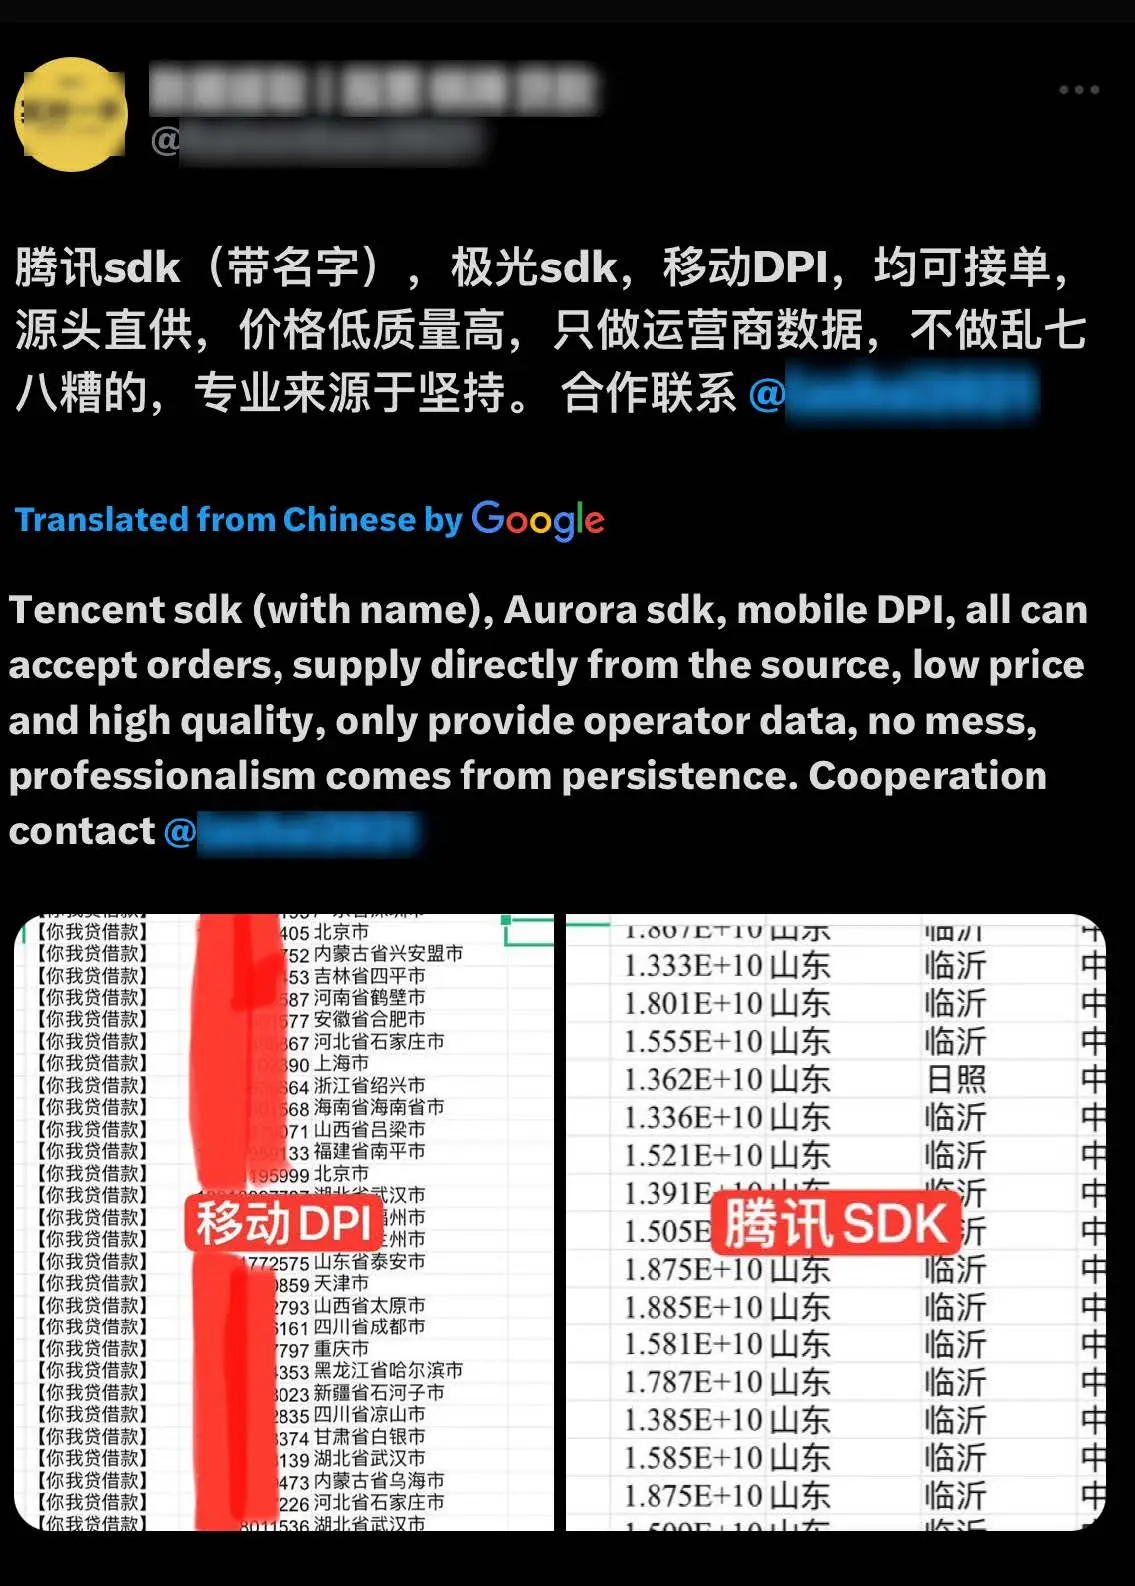 Example of X user advertising their DPI/SDK offerings